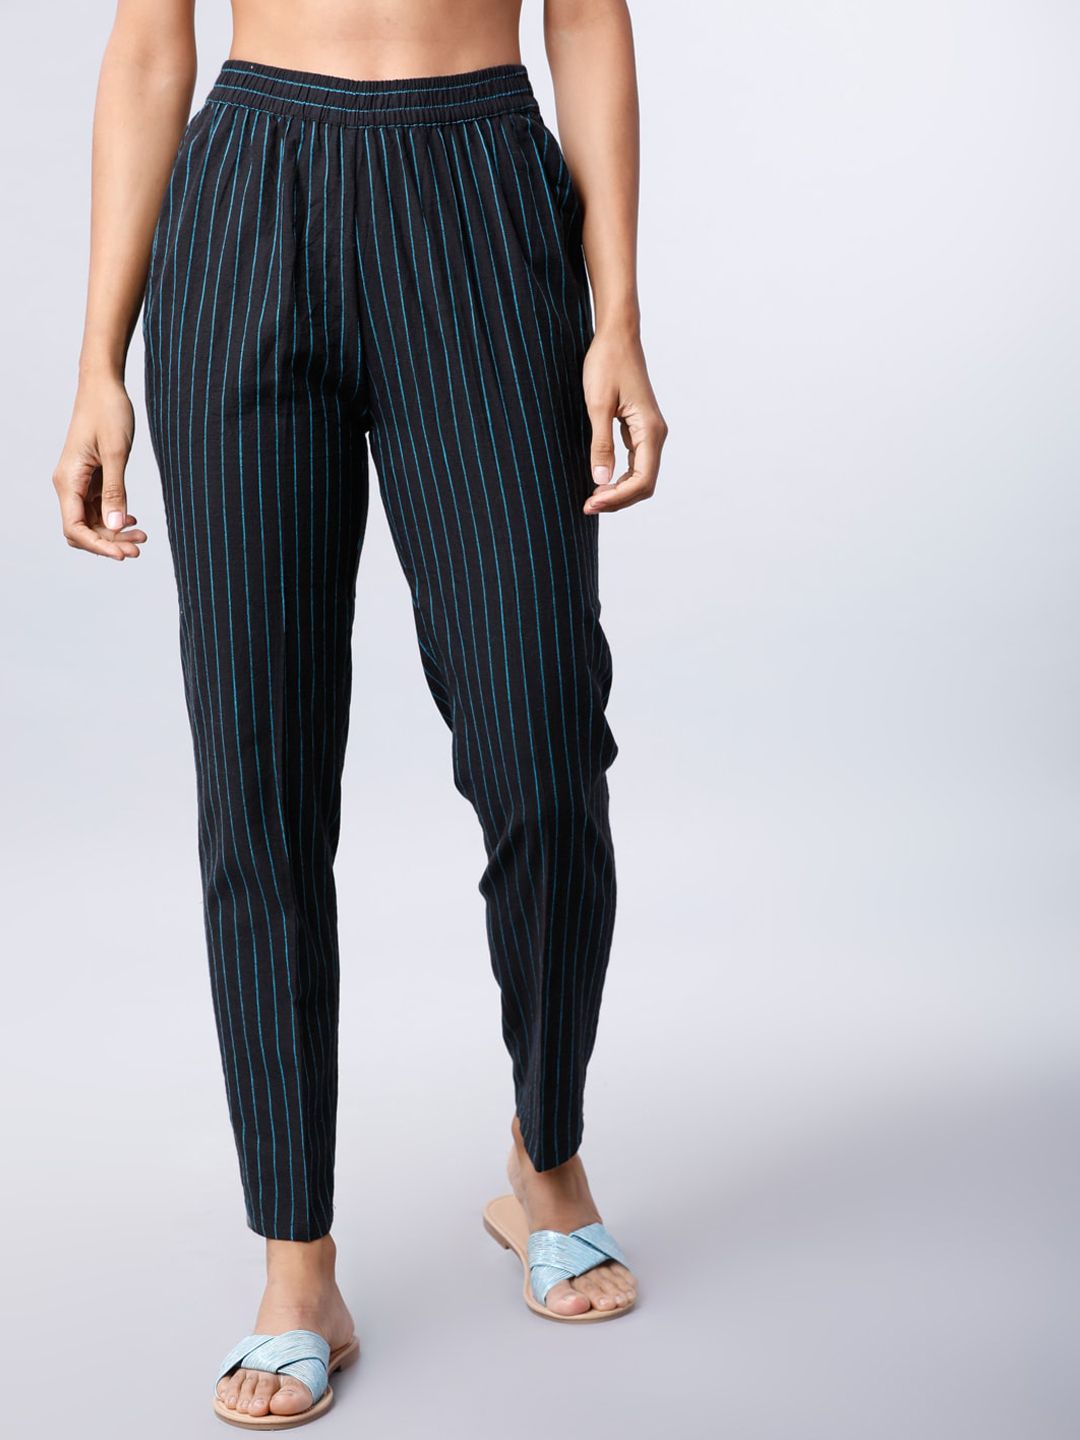 Vishudh Women Black Slim Fit Striped Regular Trousers Price in India